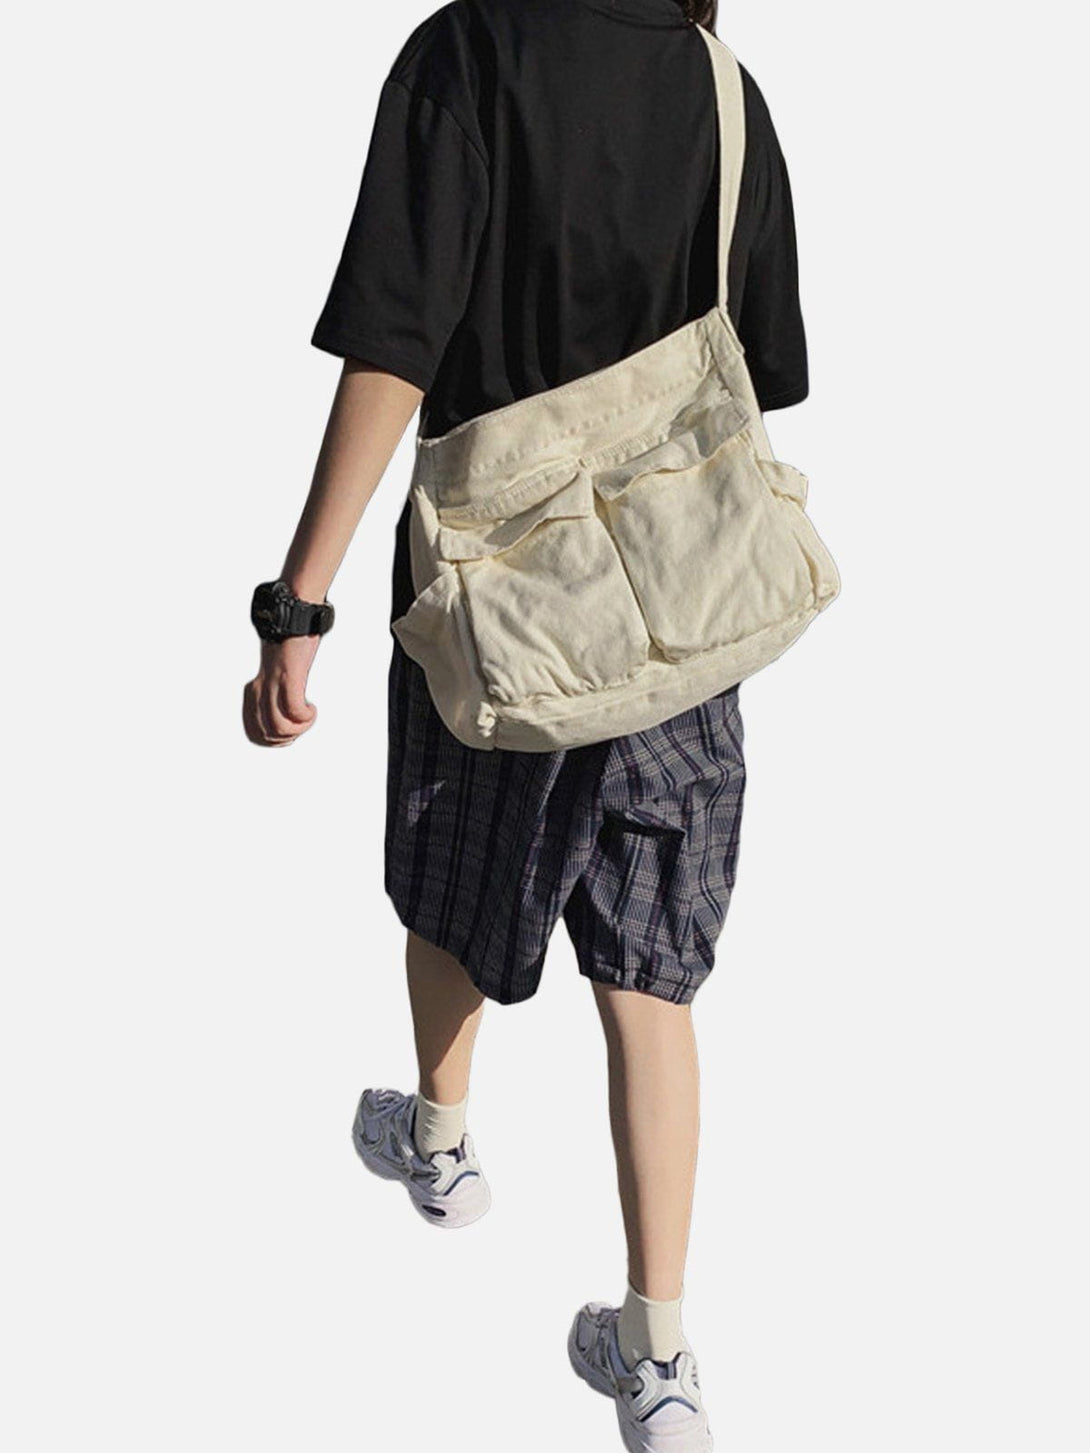 Majesda® - Solid Color Big Pocket Shoulder Bag- Outfit Ideas - Streetwear Fashion - majesda.com